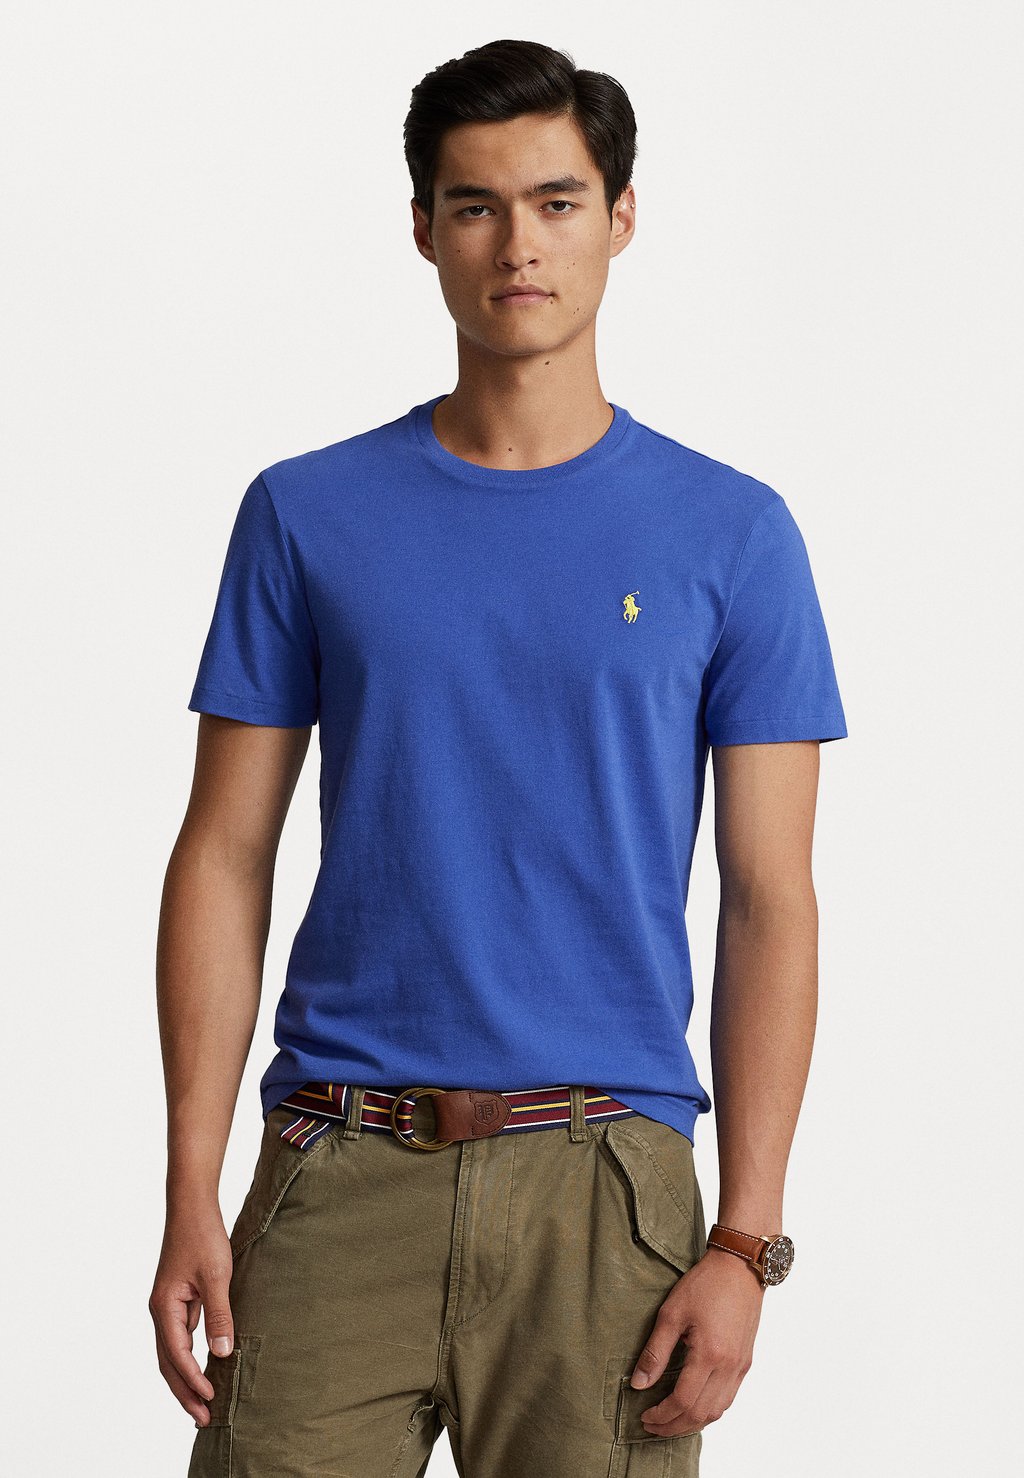 Базовая футболка Polo Ralph Lauren, свобода